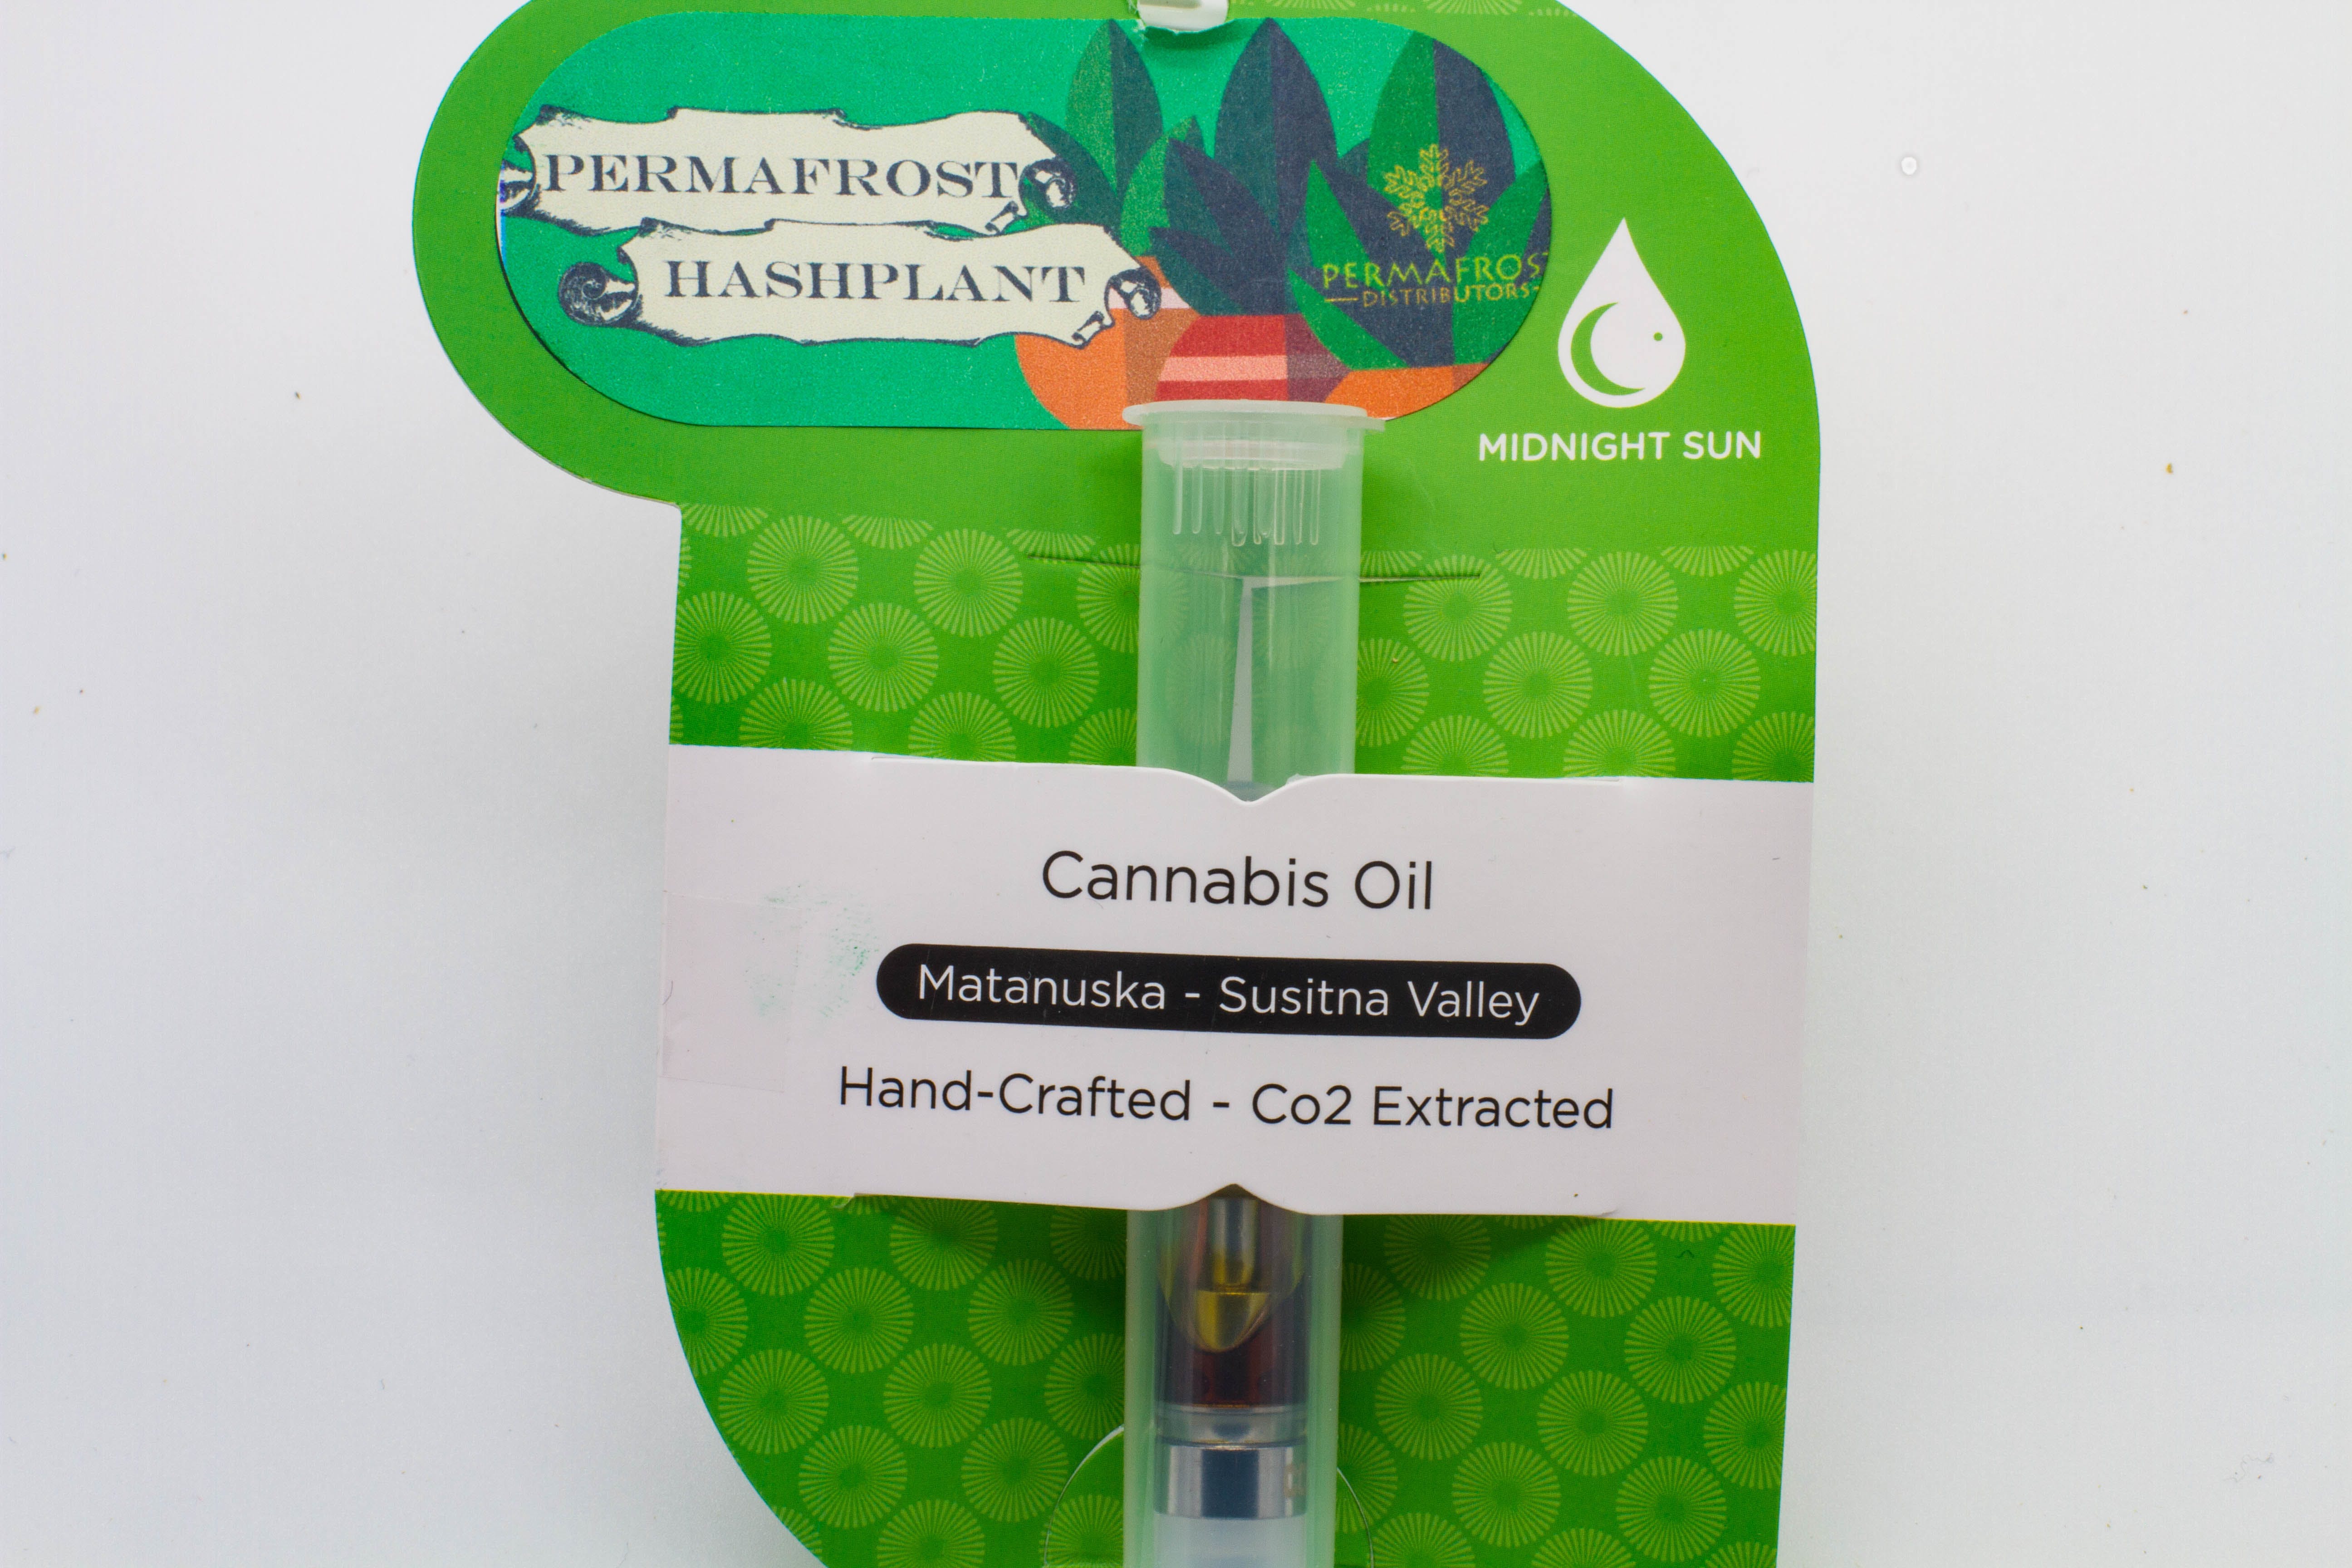 concentrate-permafrost-hashplant-vapor-cart